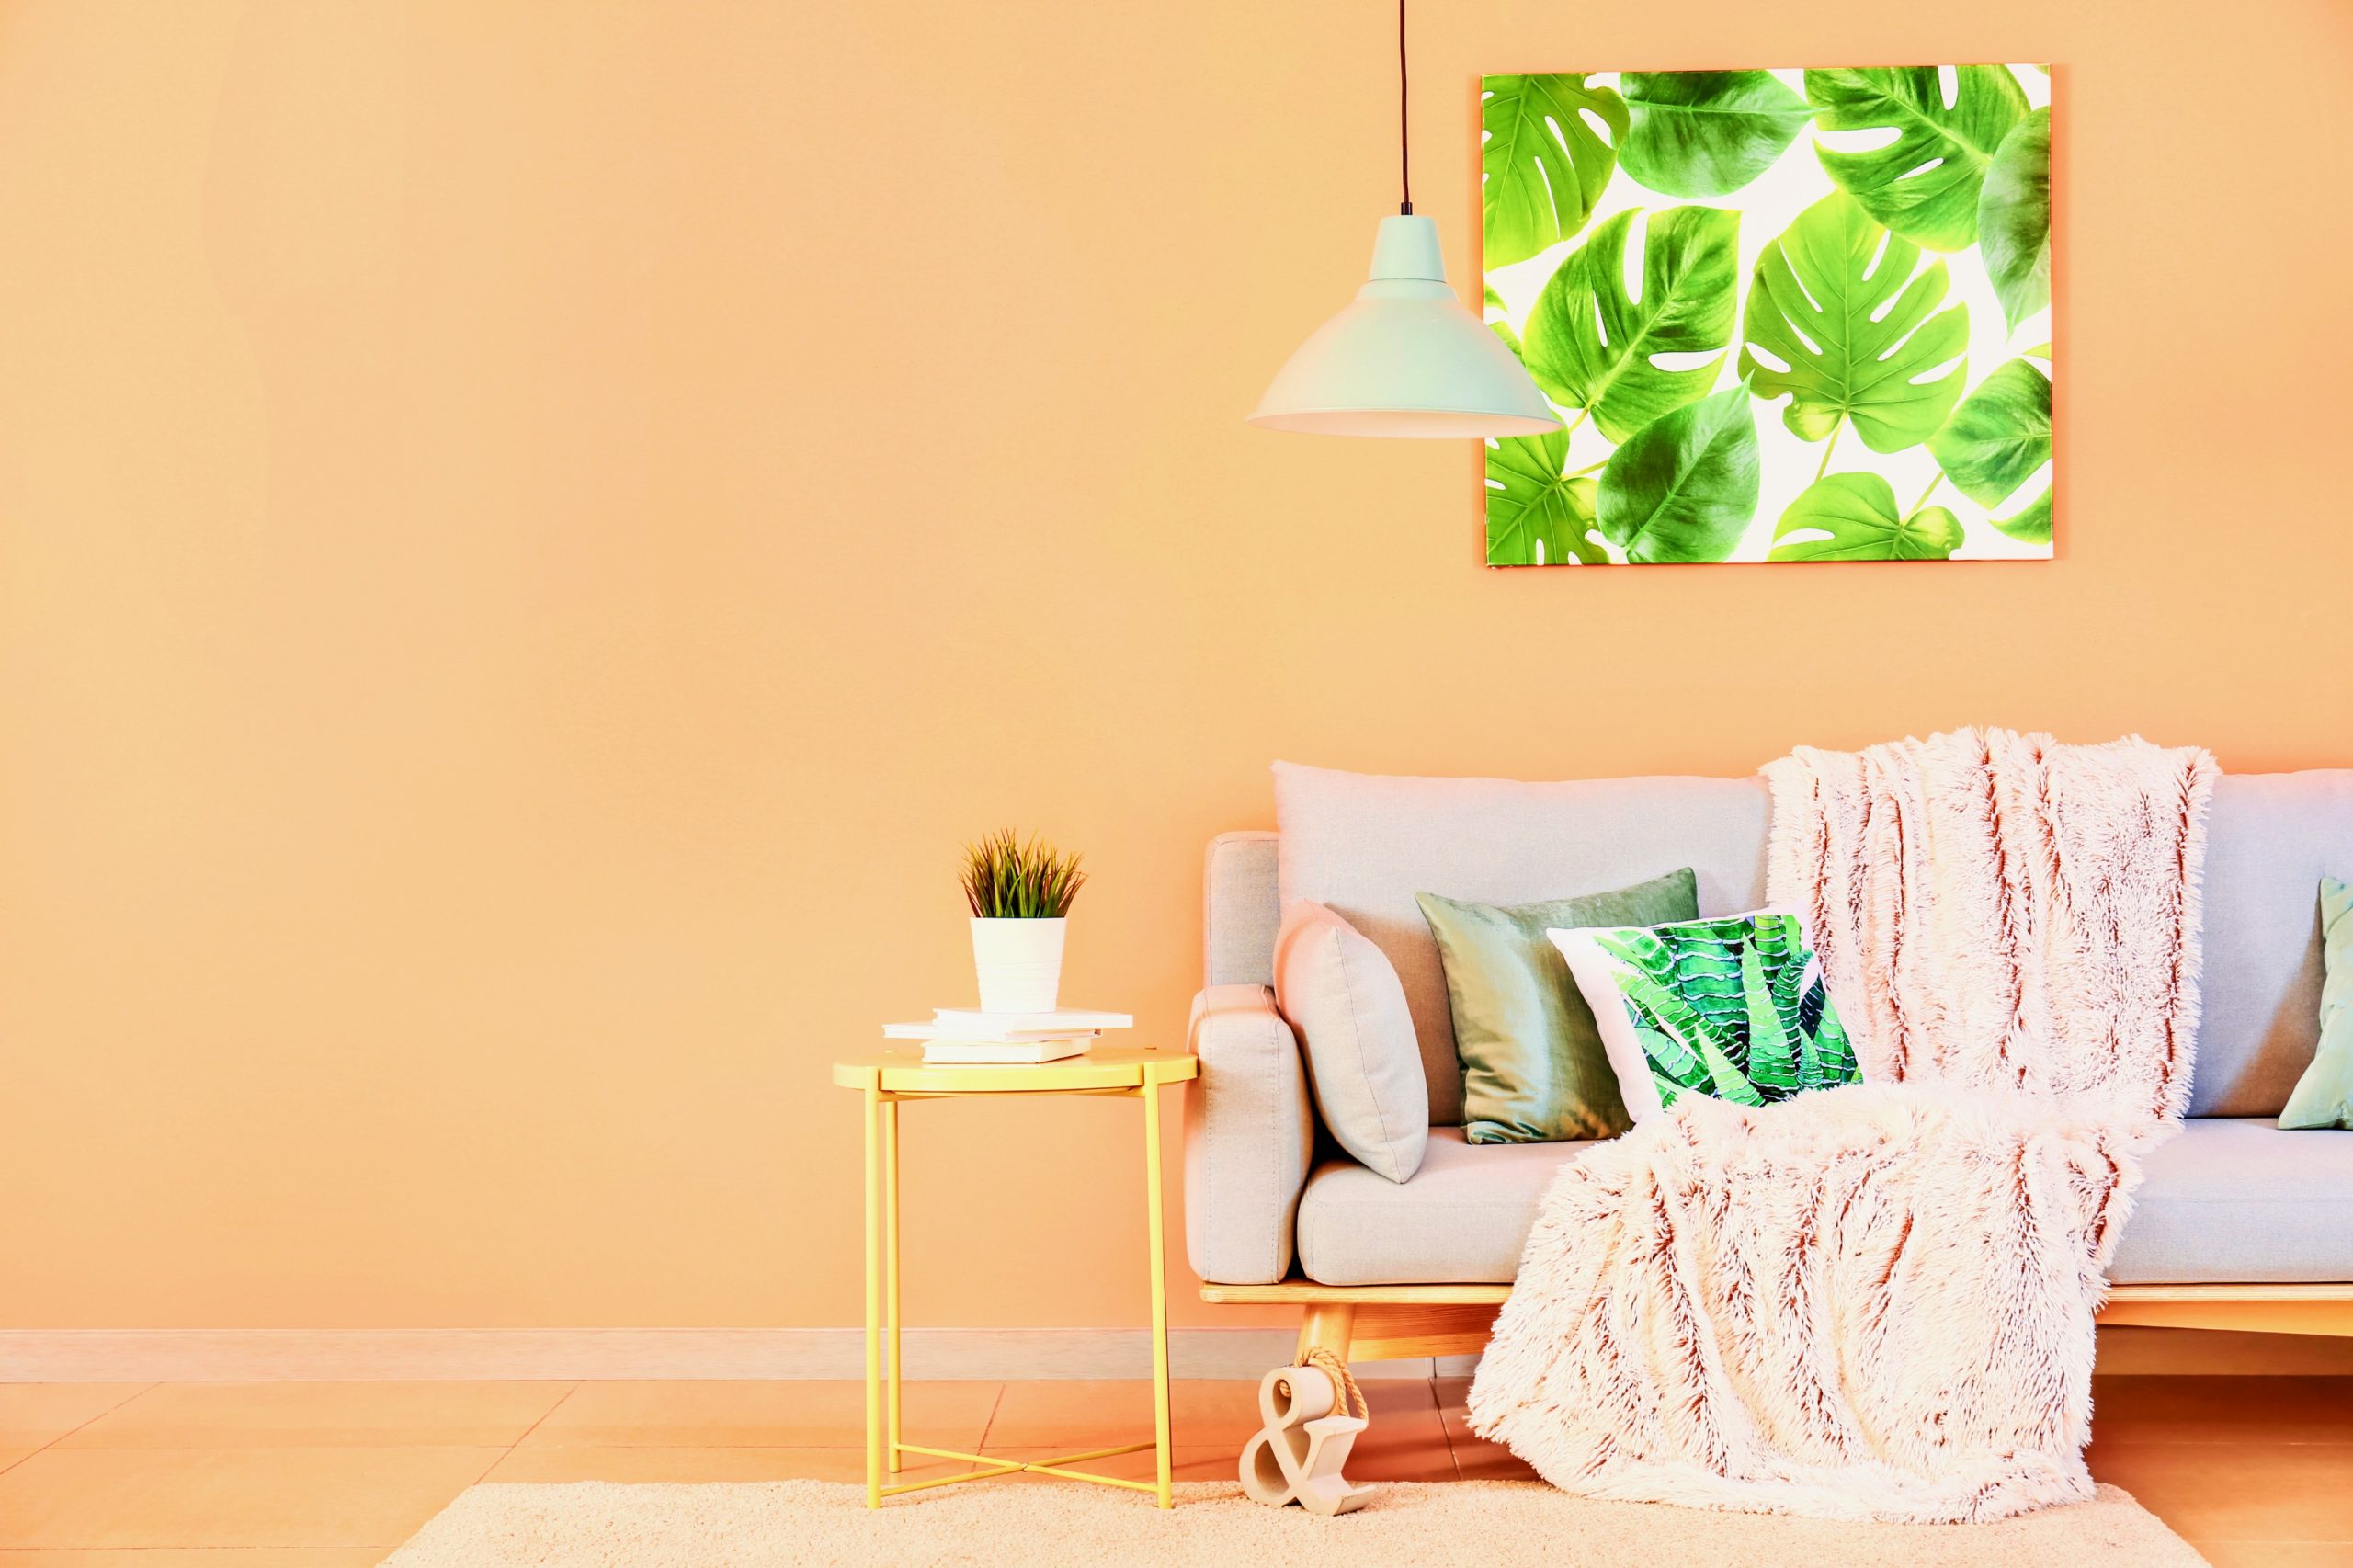 <img src="orange.jpg" alt="orange living room with wall art"/> 